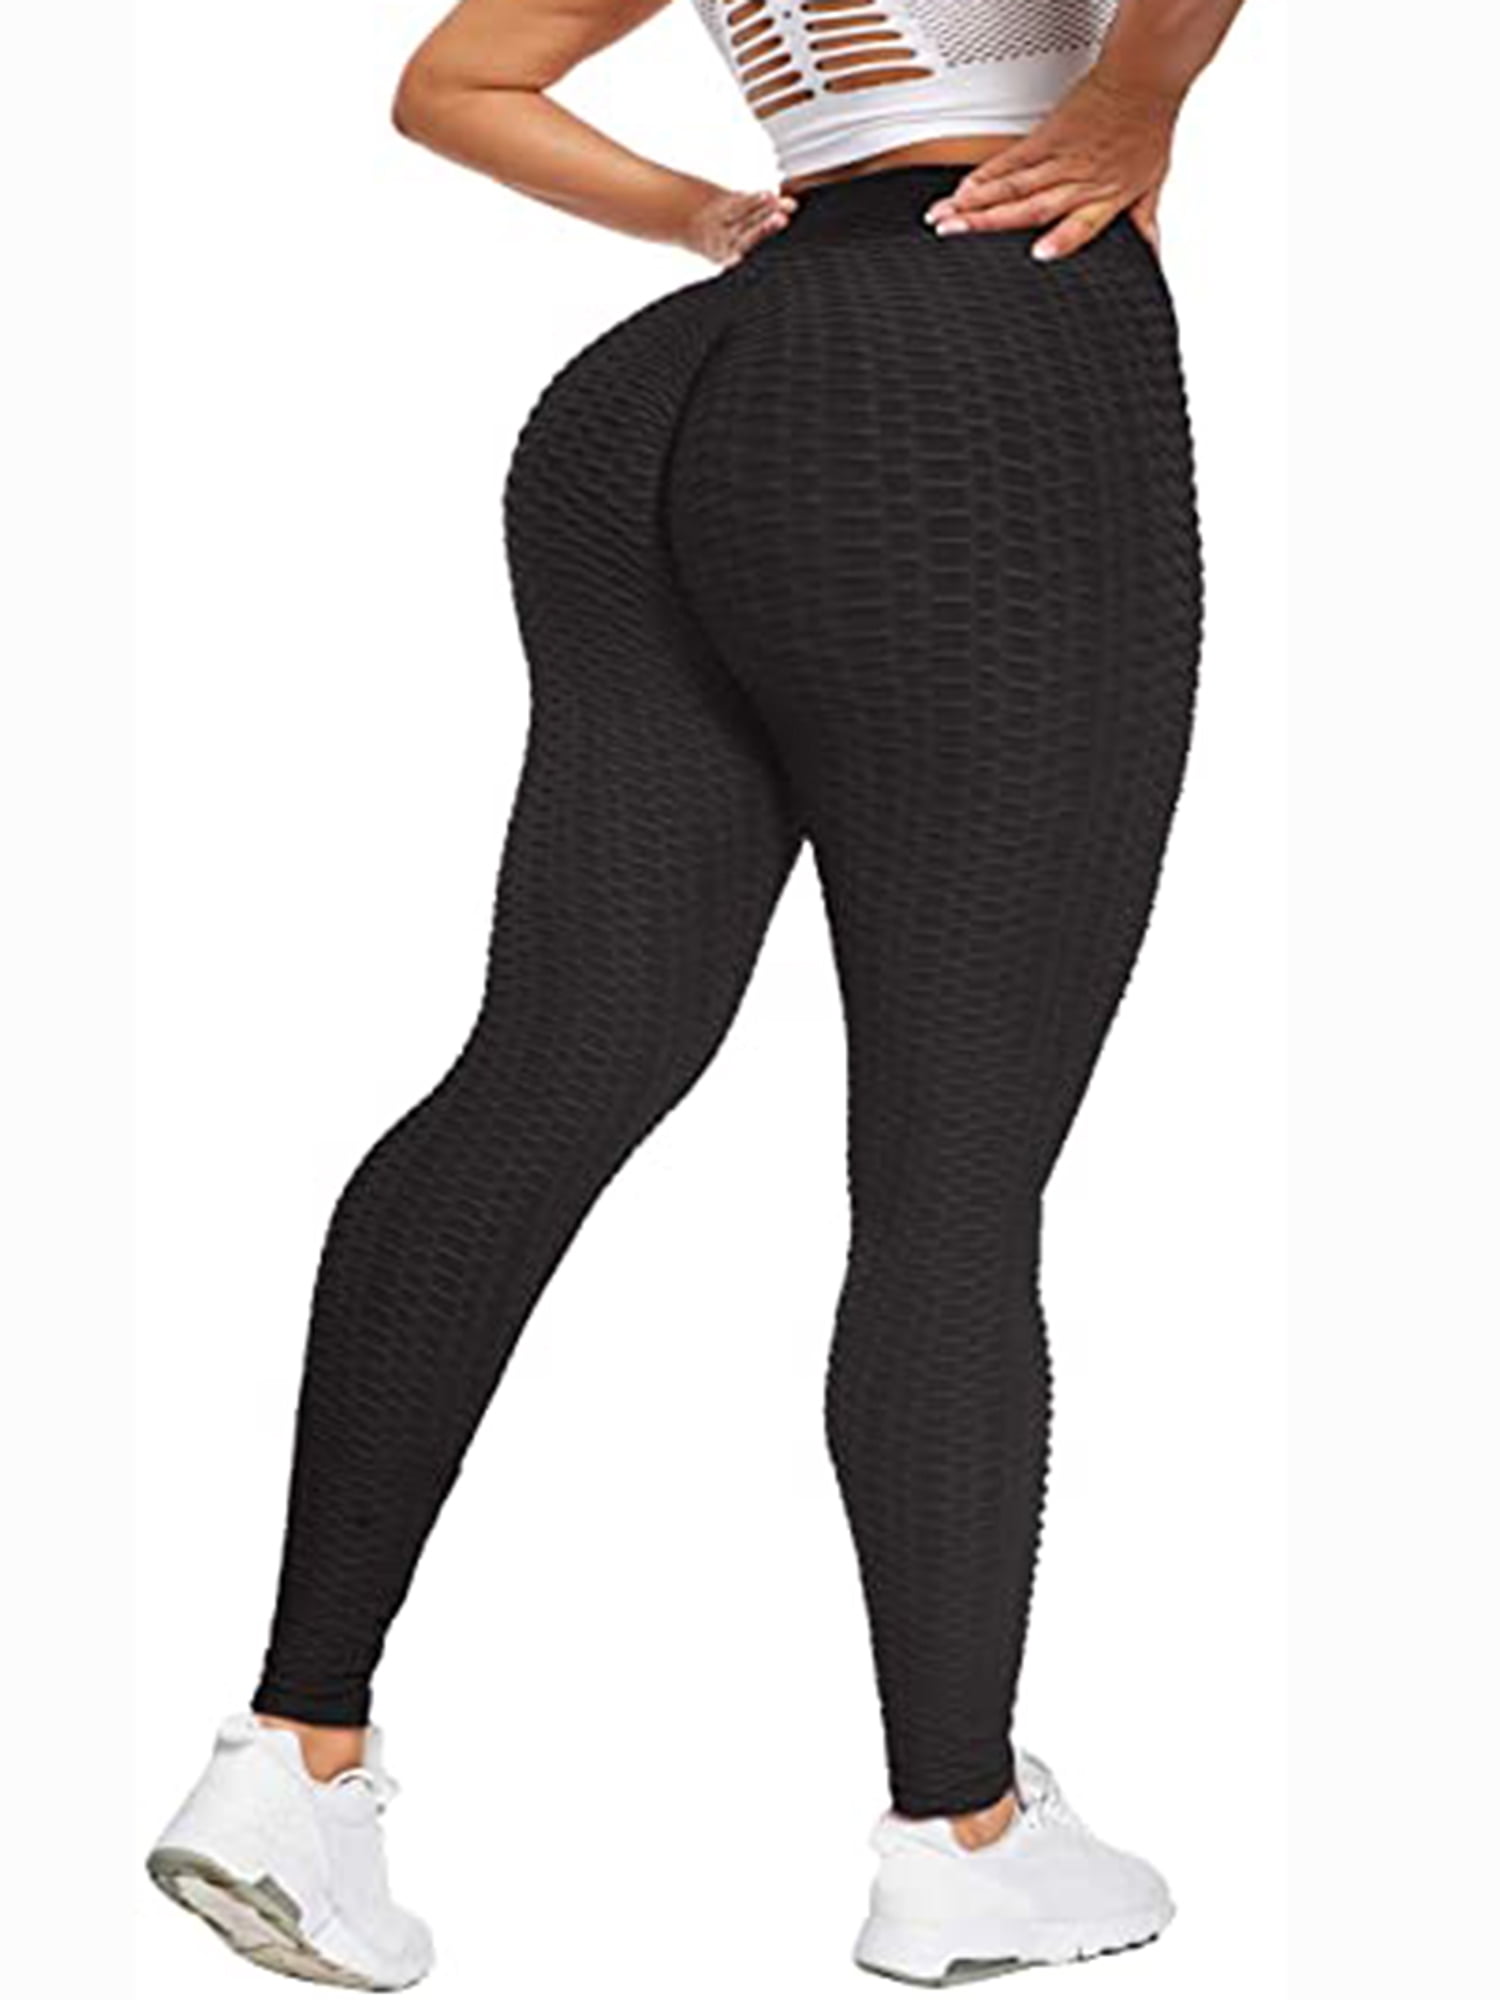 LELINTA Women Sports Yoga Workout Gym Fitness Tummy Control Leggings Pants  Butt Lifting Athletic Clothes, Light Grey, S-XL 